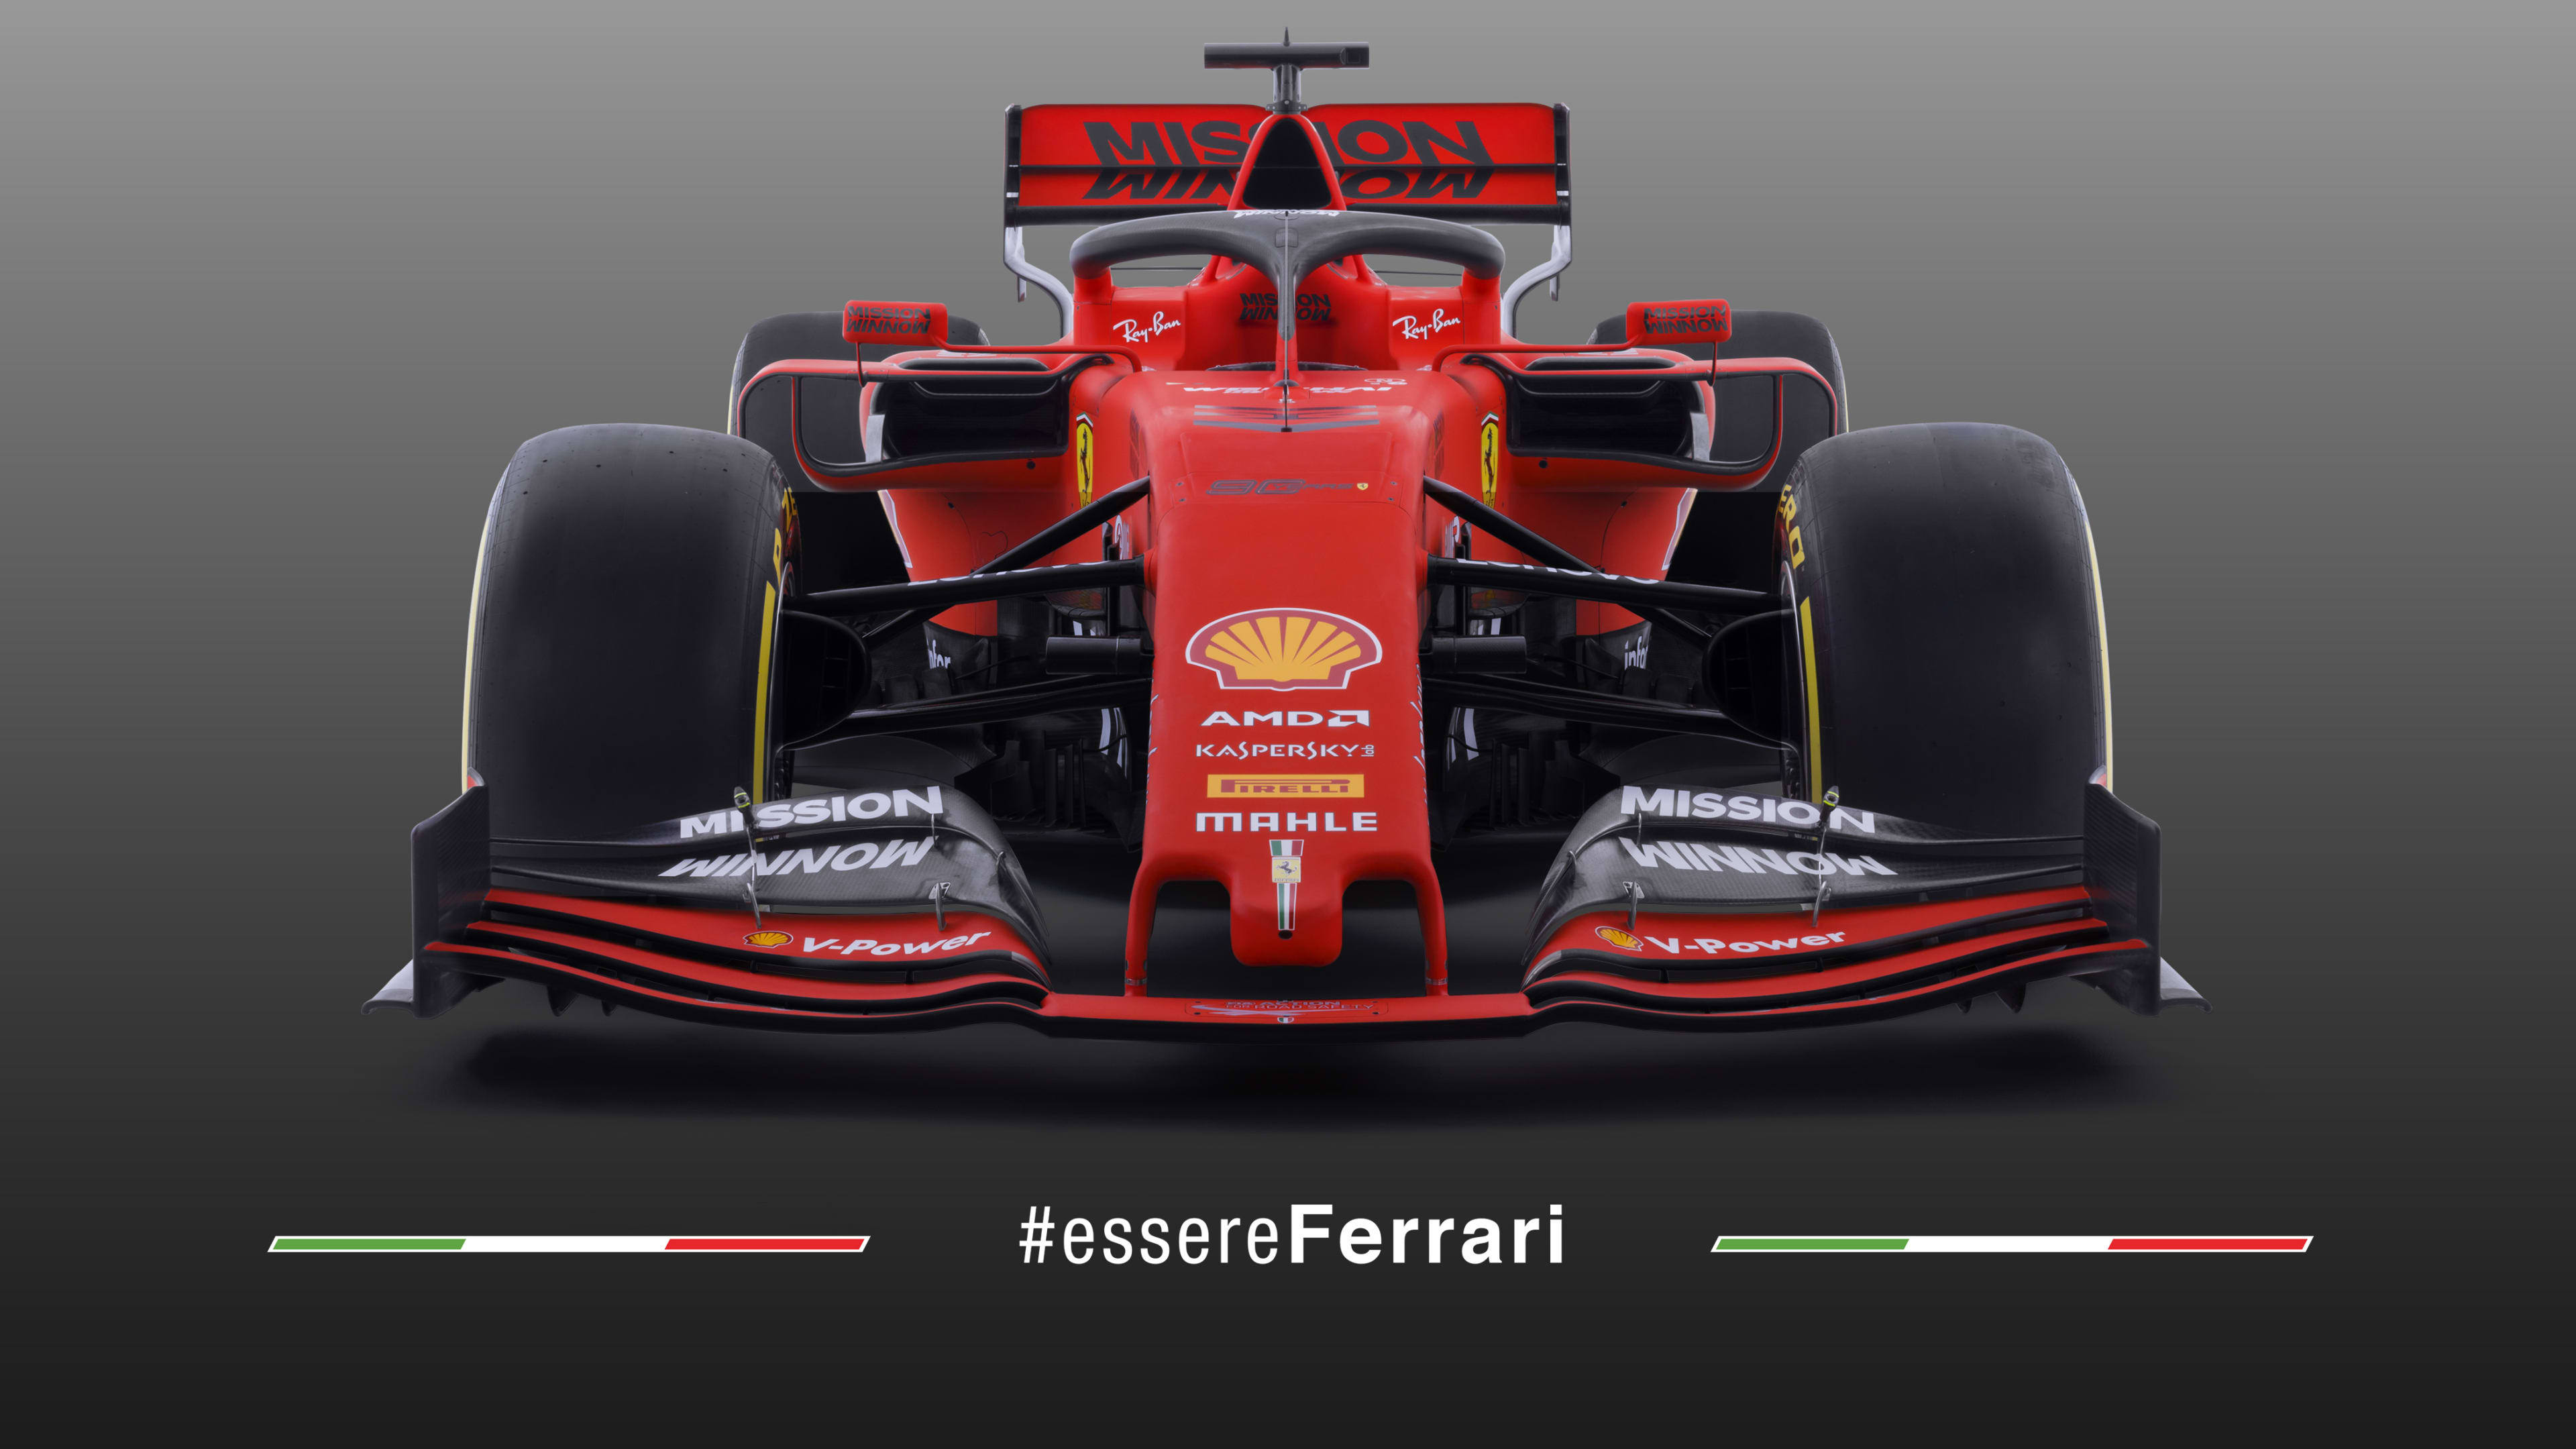 Ferrari Sf90: All The Angles Of The 2019 F1 Car | Formula 1®